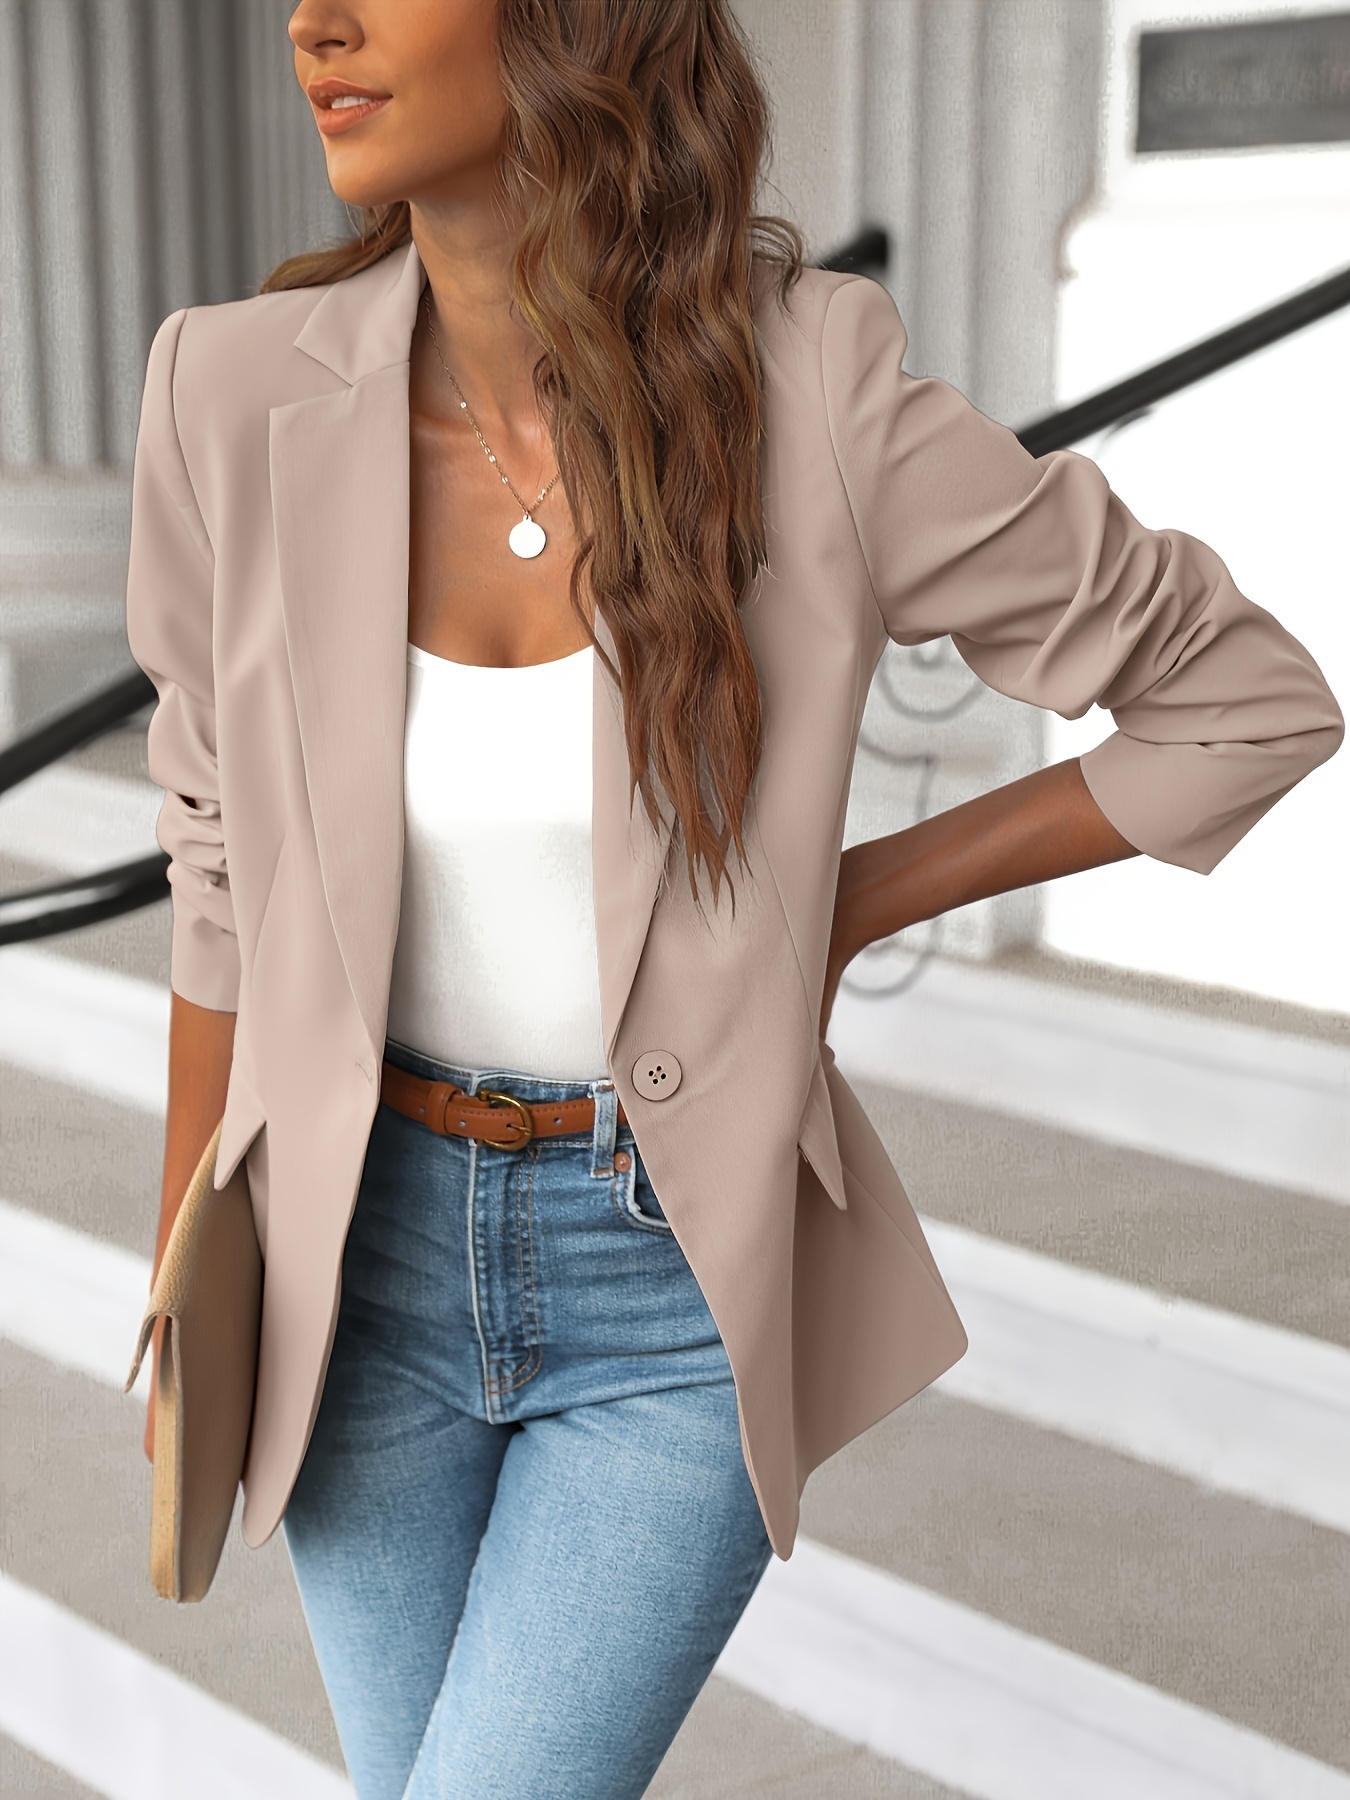 2023 Spring Women Blazer Trending Fashion Casual Long Sleeve Slim Jackets  Blazers Open Front Office Lady Suits OL Lapel Coat Cardigan Formal Blazers  Plus Size S-5XL